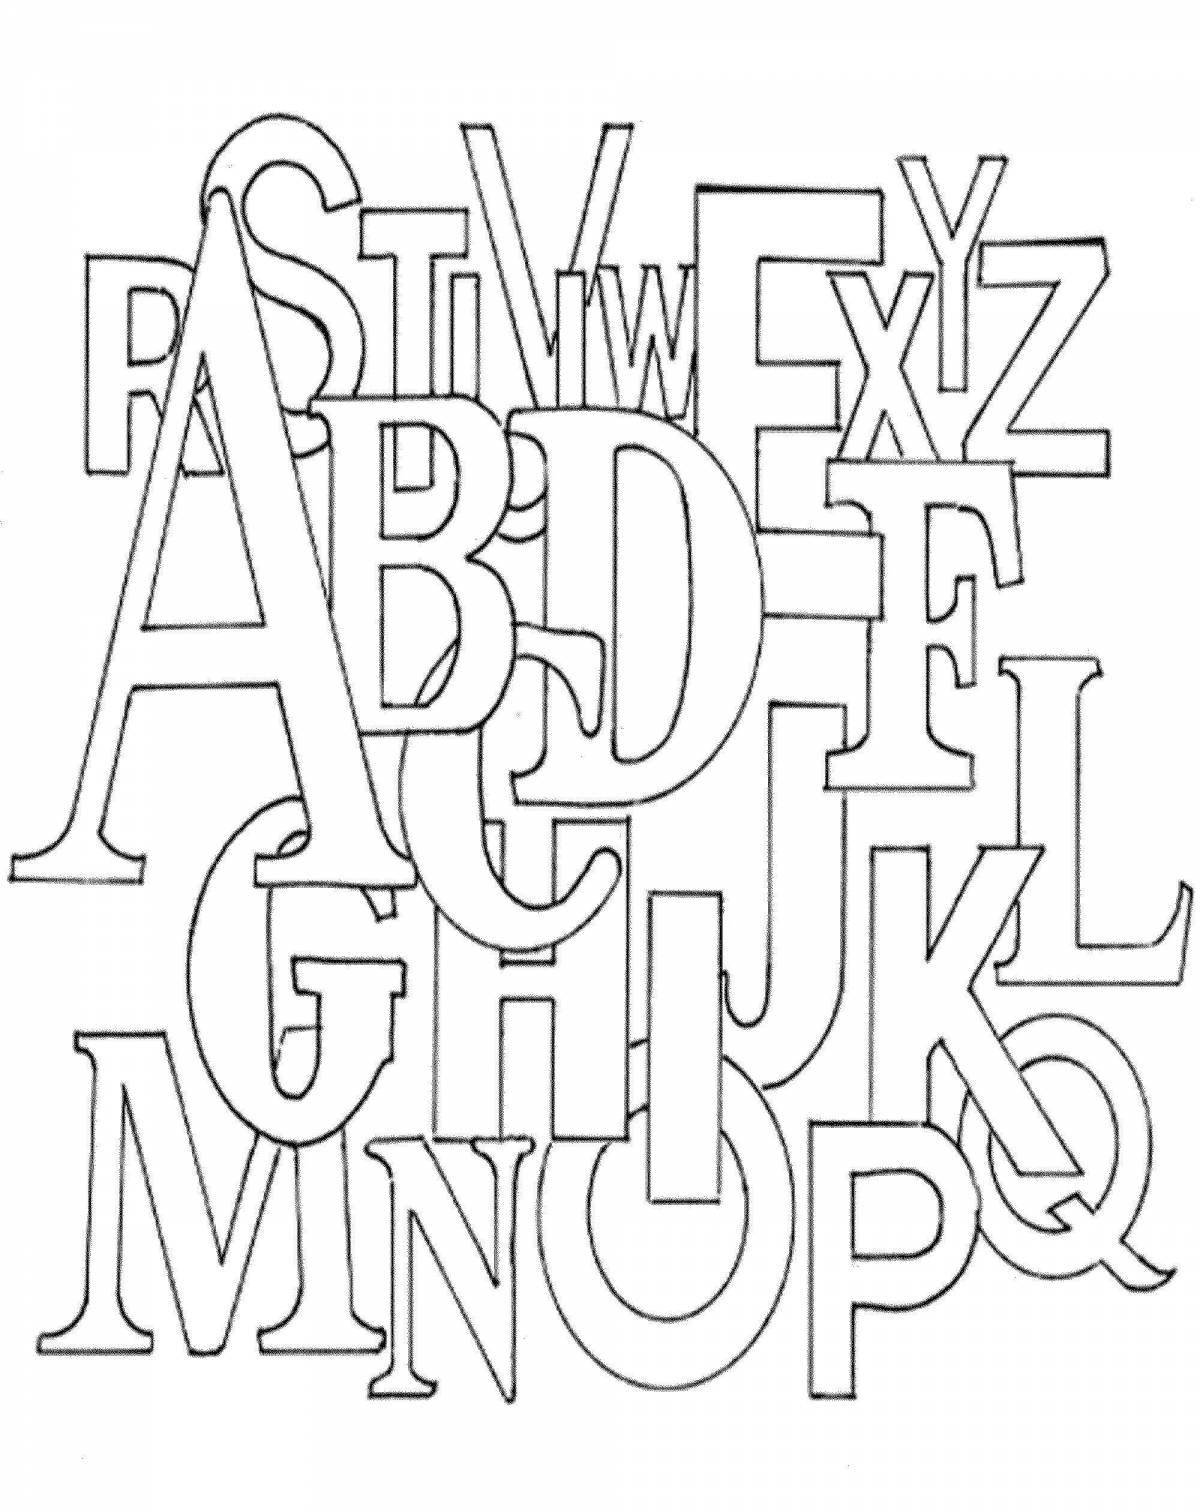 Fun coloring alphabet page